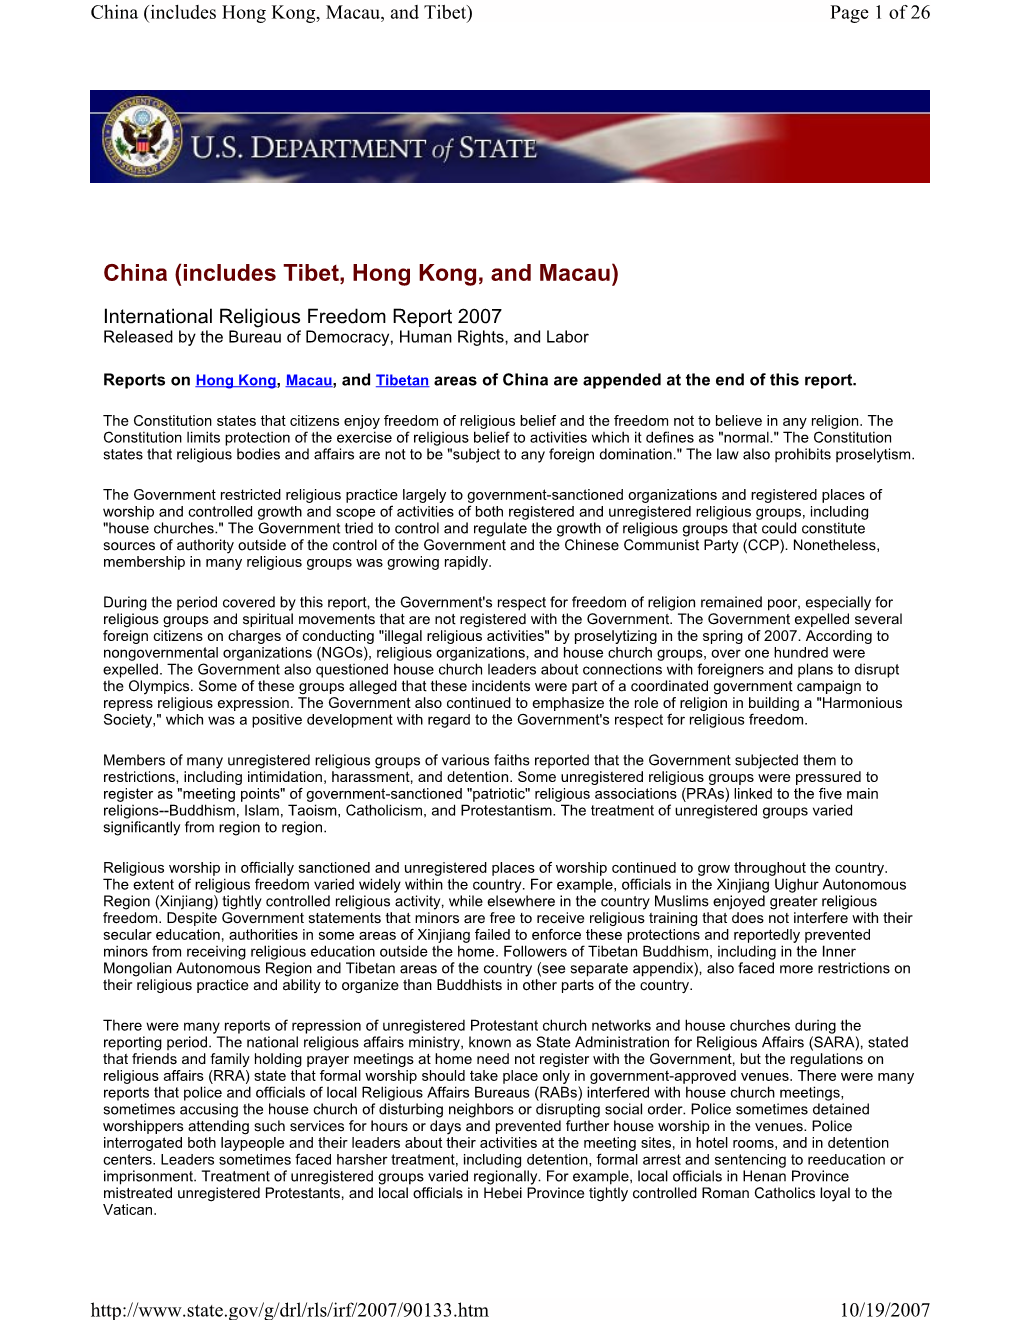 Report on International Religious Freedom 2007: China